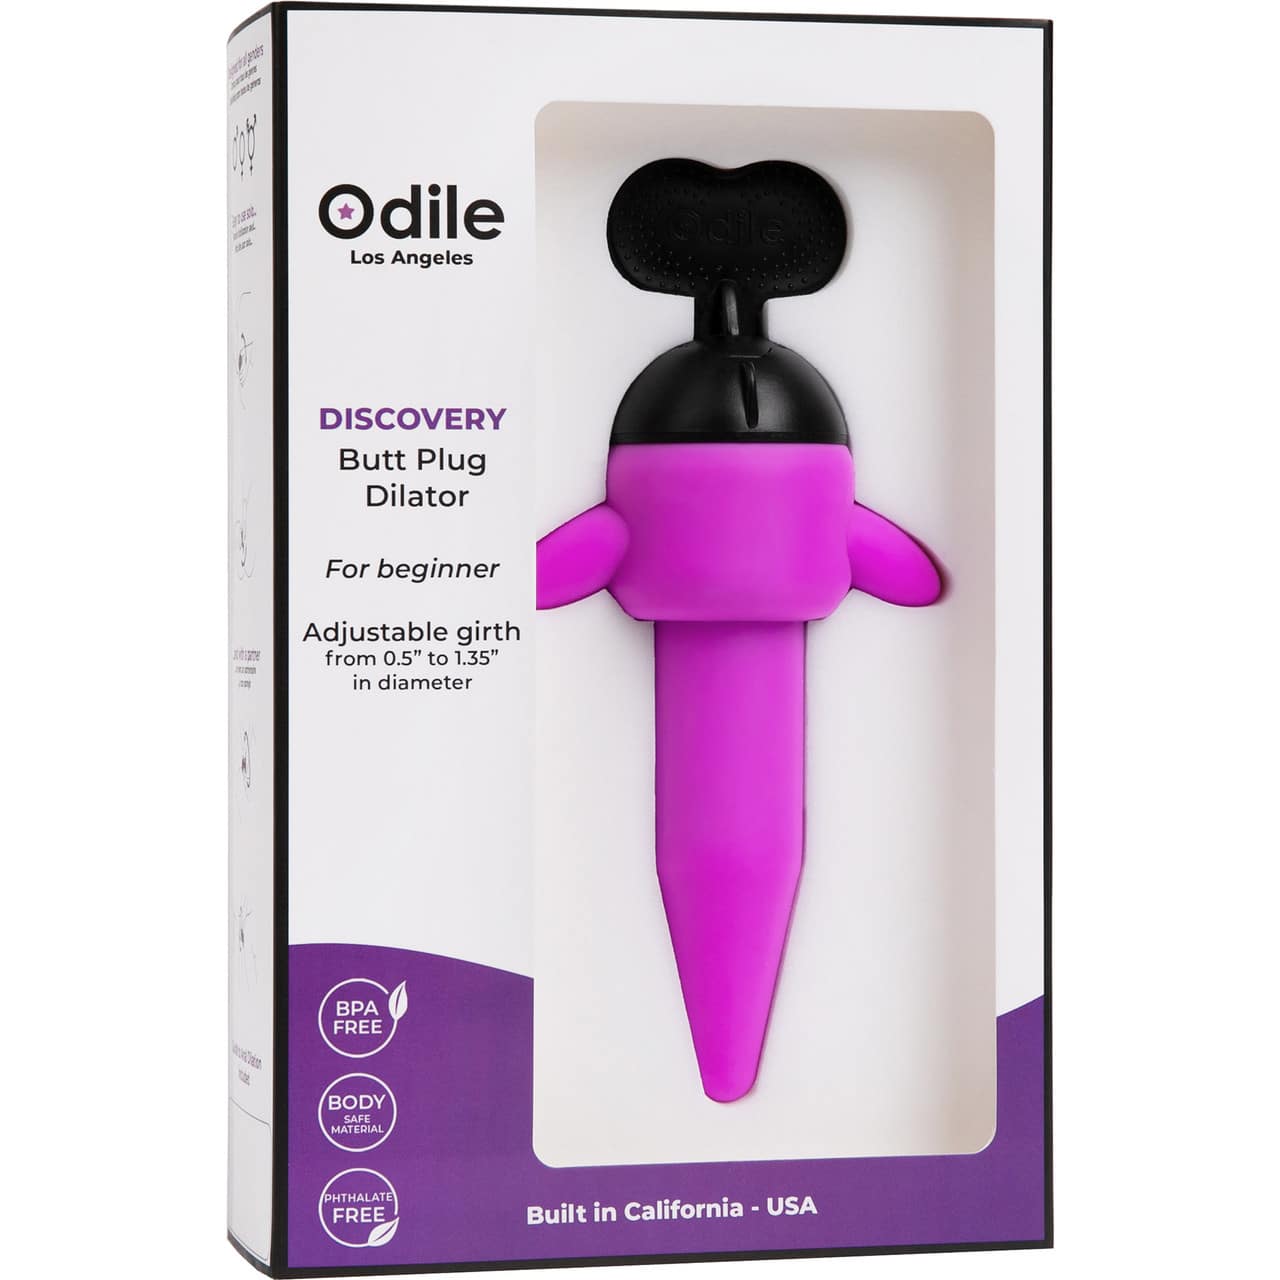 Odile Discovery Butt Plug Dilator For Beginners. Slide 3